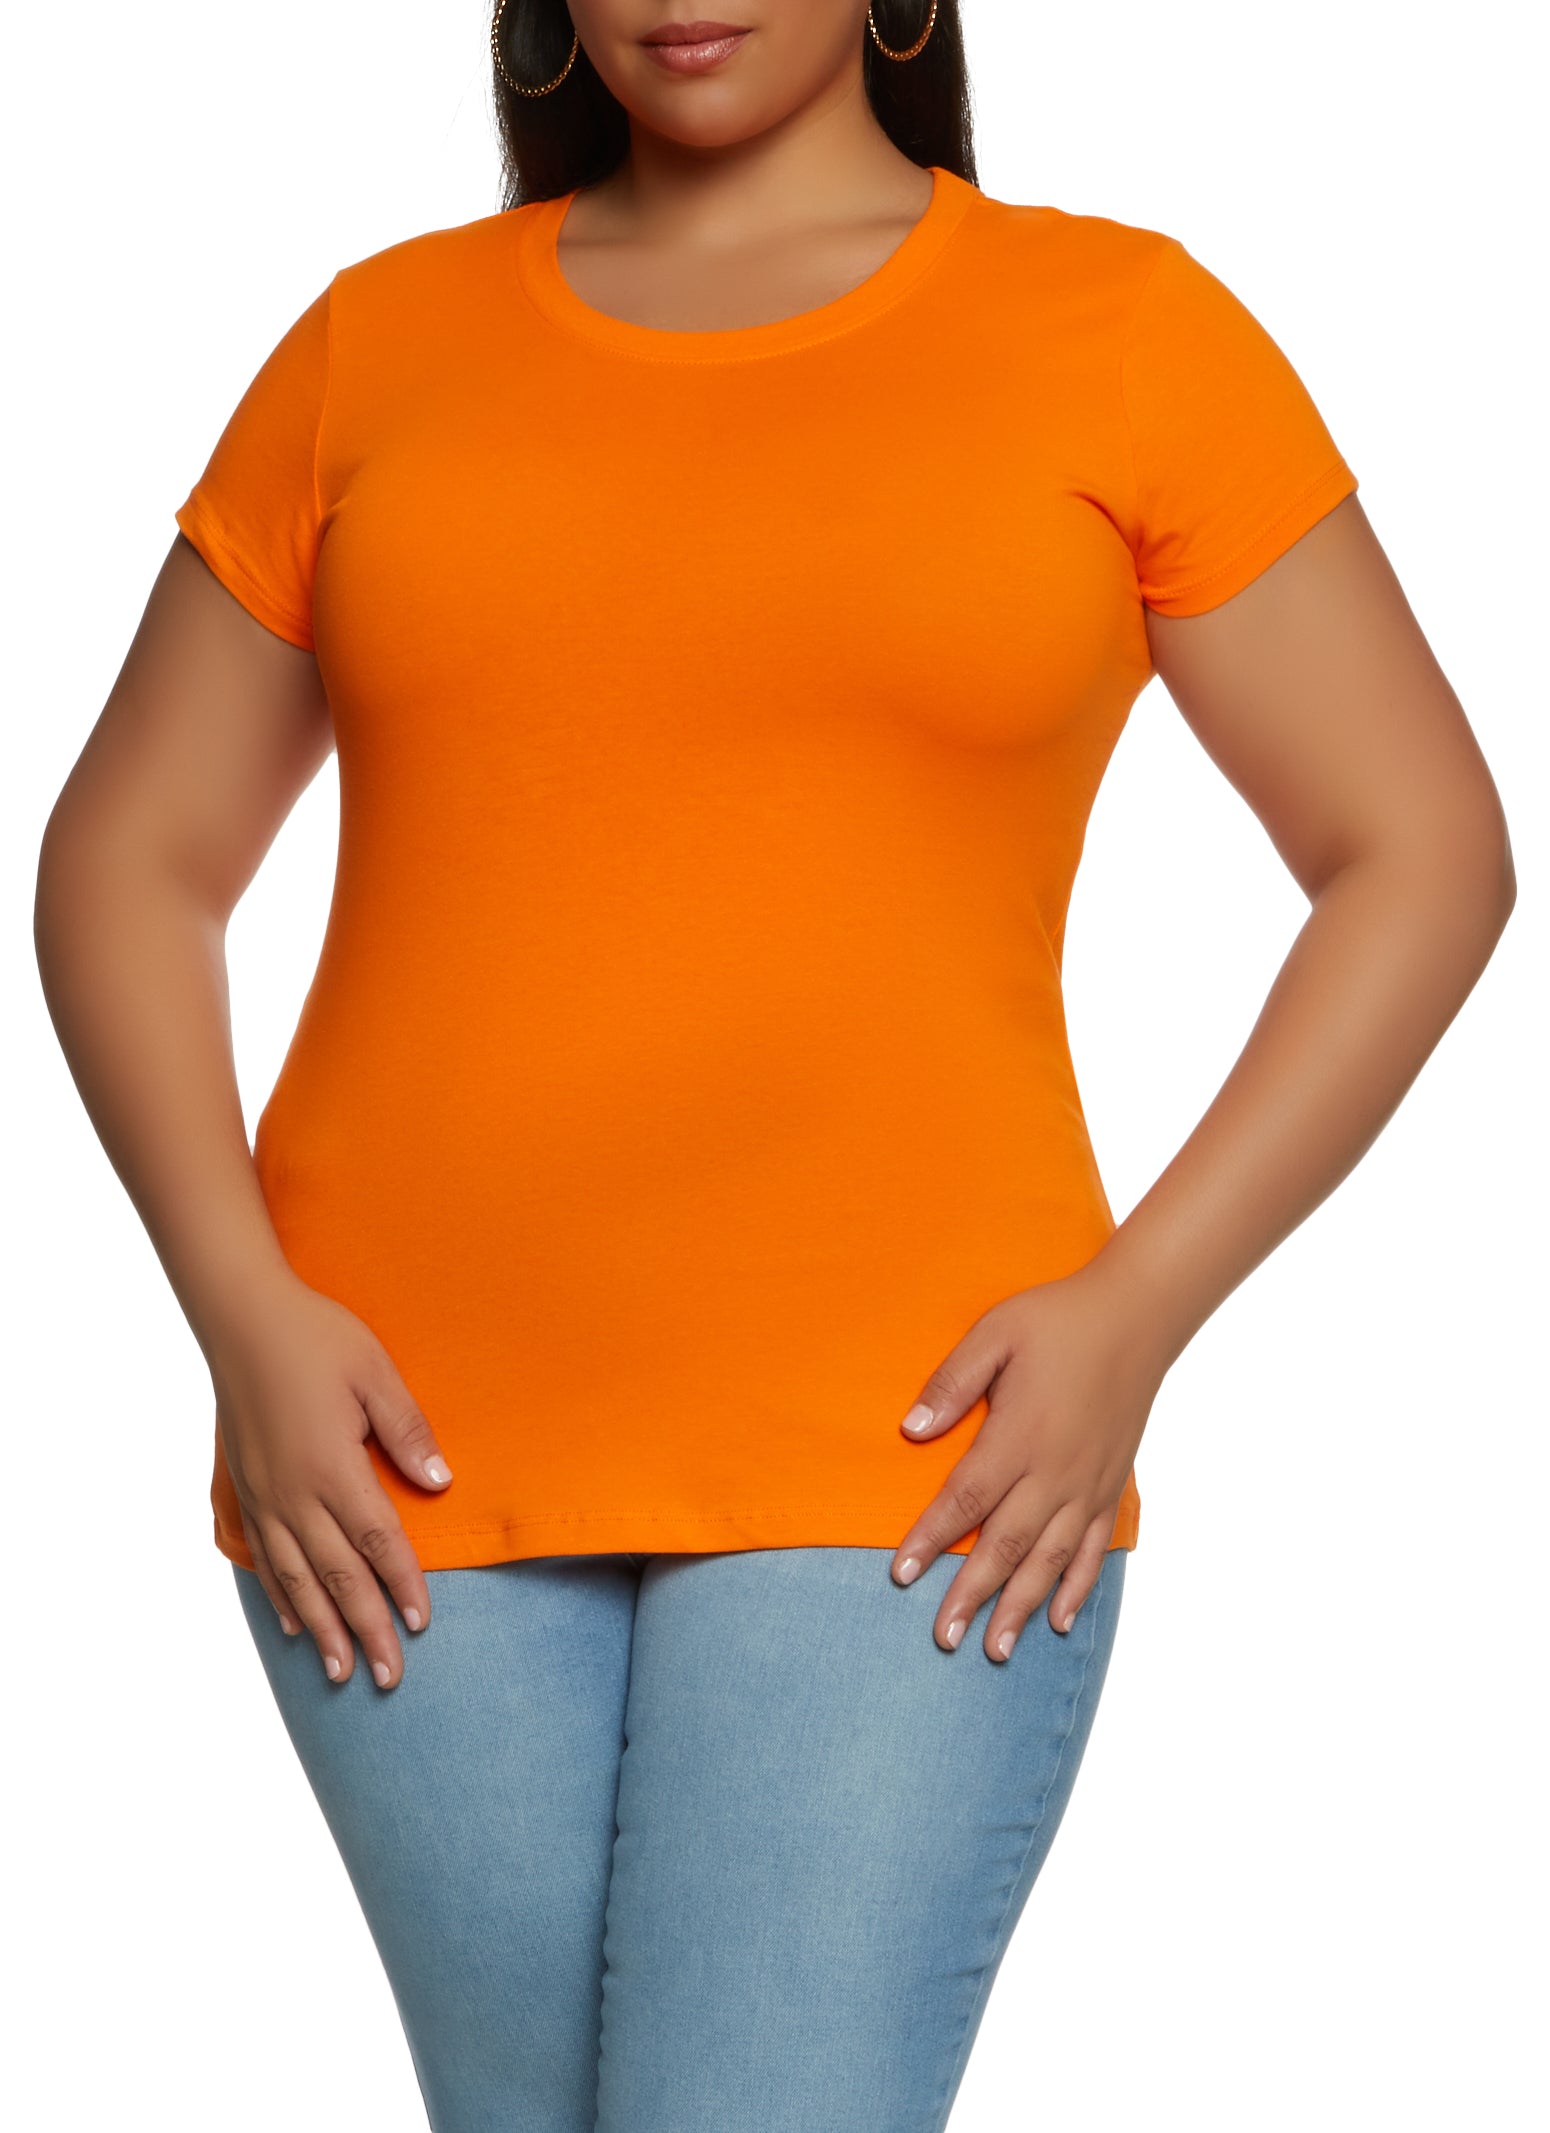 plus-size  Tops for leggings, Plus size outfits, Orange leggings